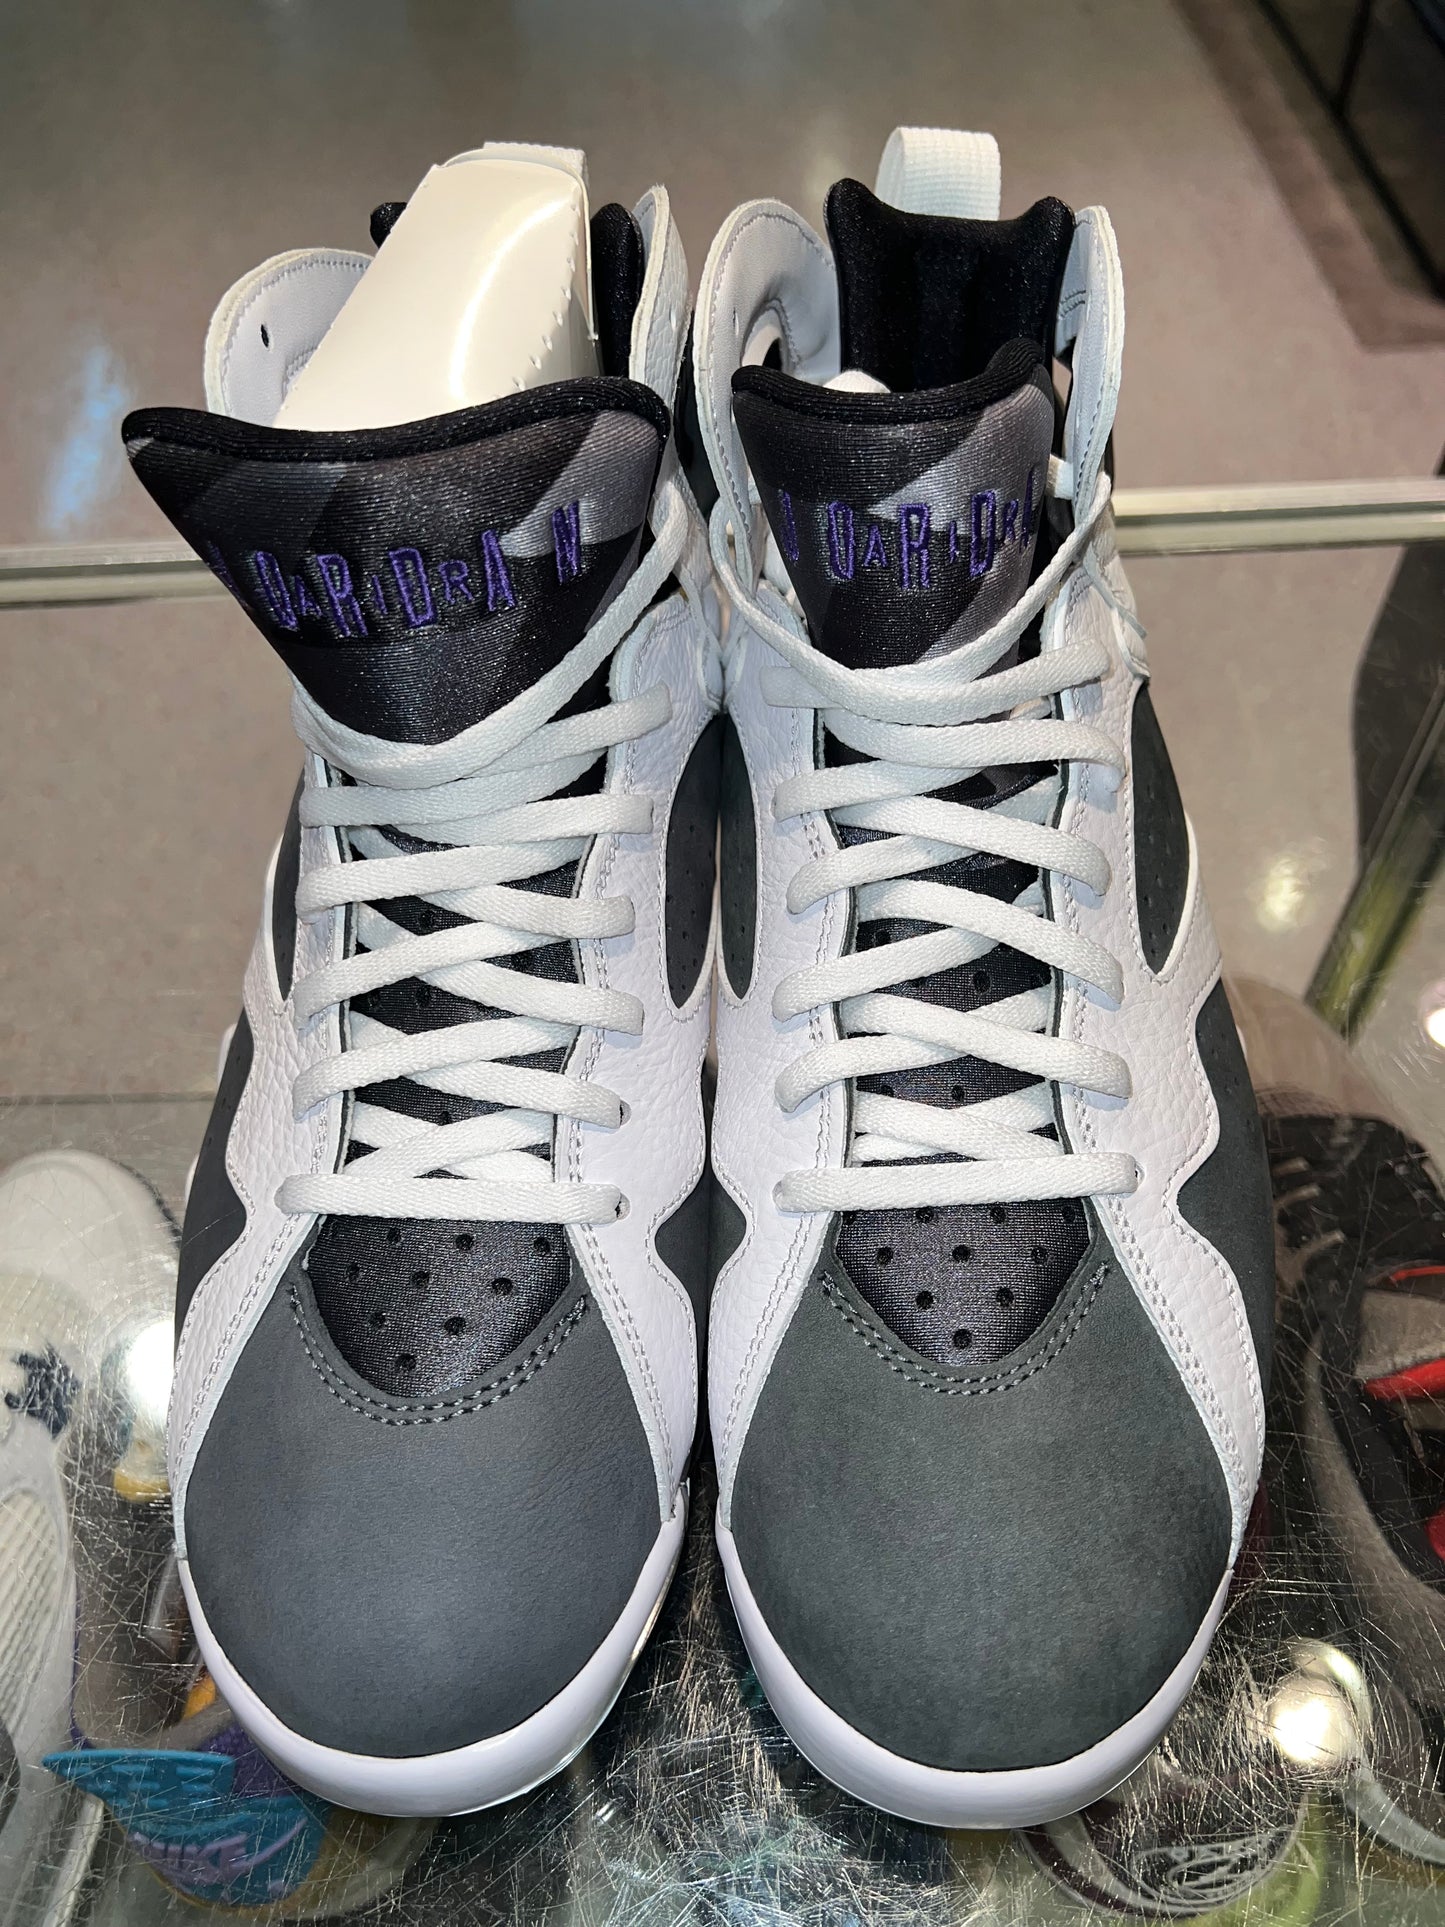 Size 9 Air Jordan 7 “Flint” Brand New (Mall)